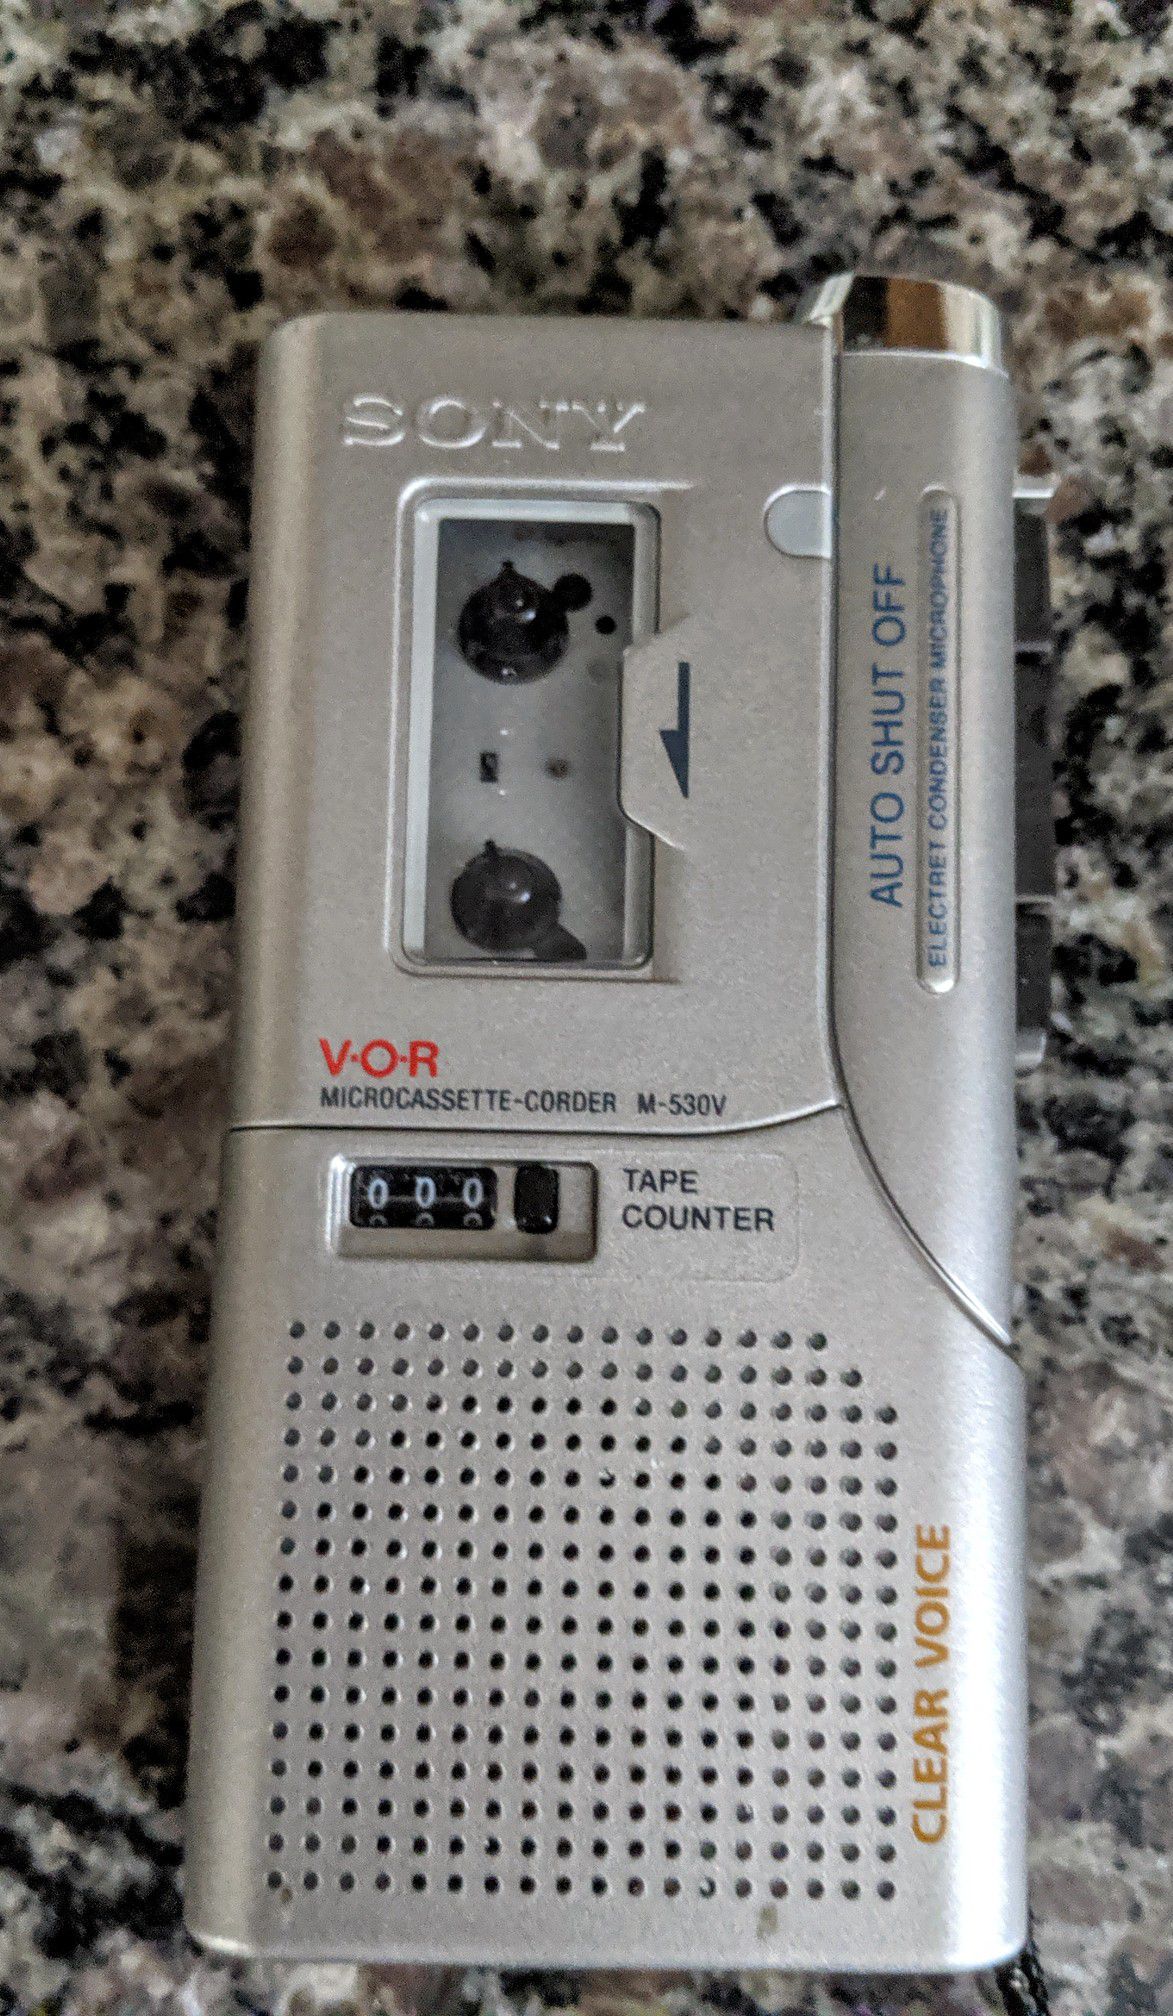 SONY M-530V Handheld Cassette Voice Recorder VOR Microcassette -Works Great